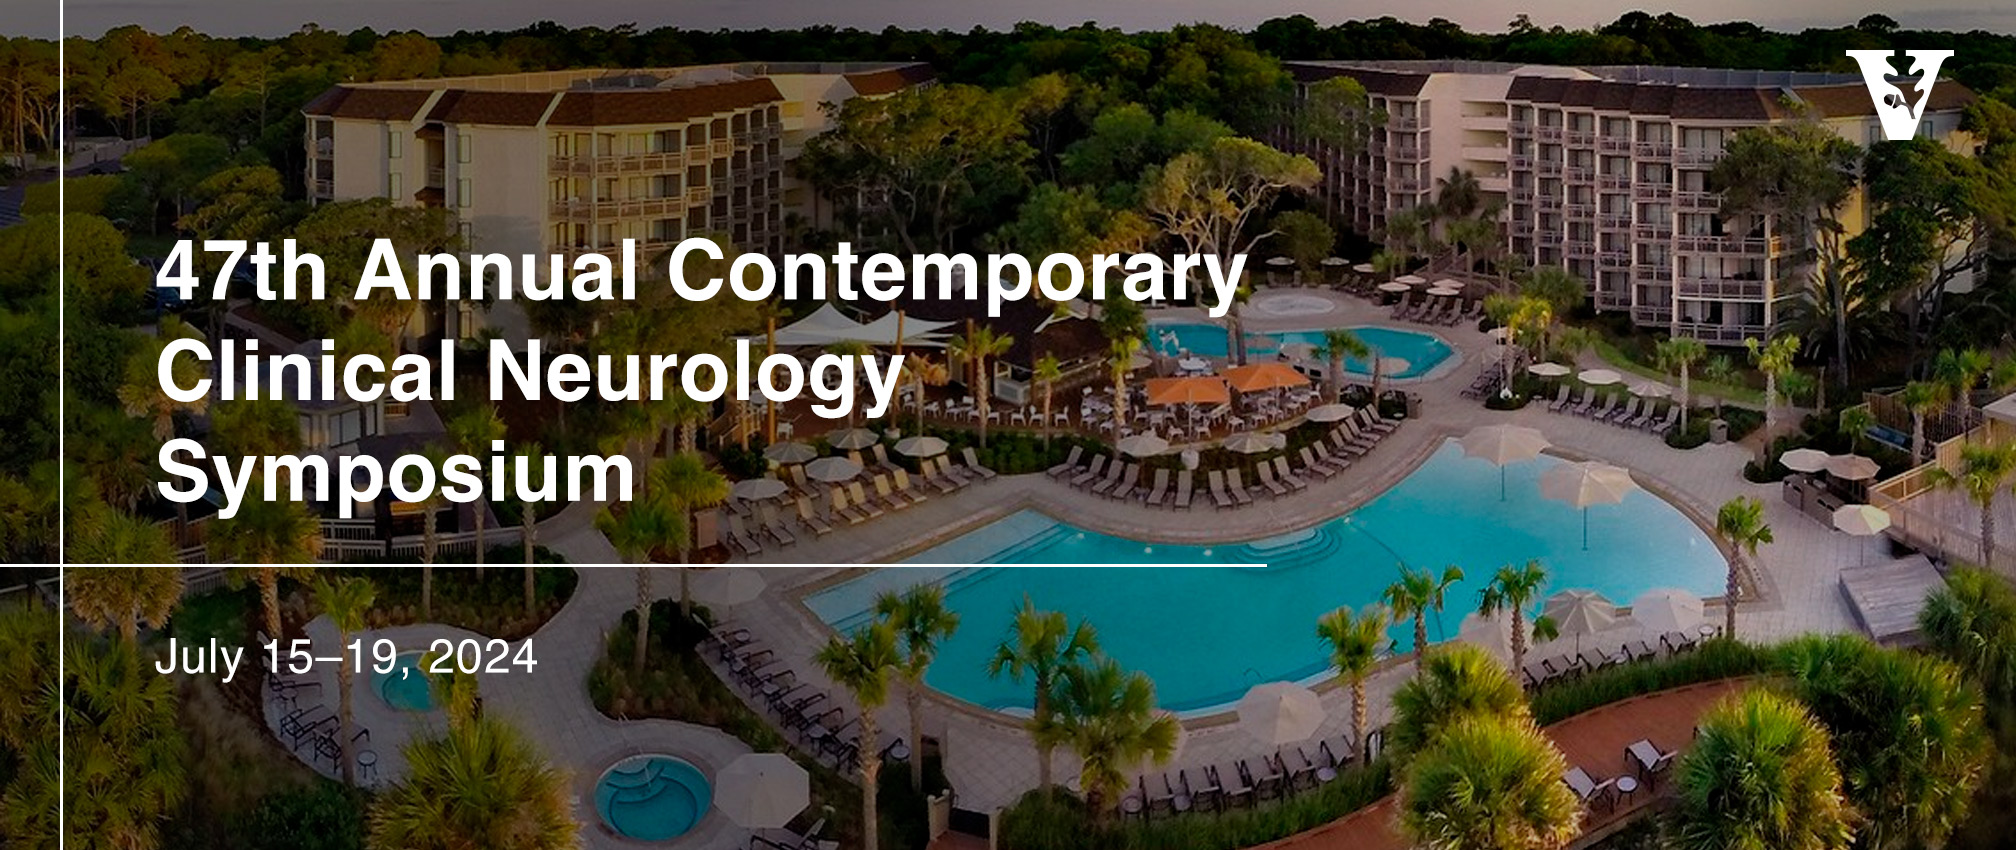 47th Annual Contemporary Clinical Neurology Symposium